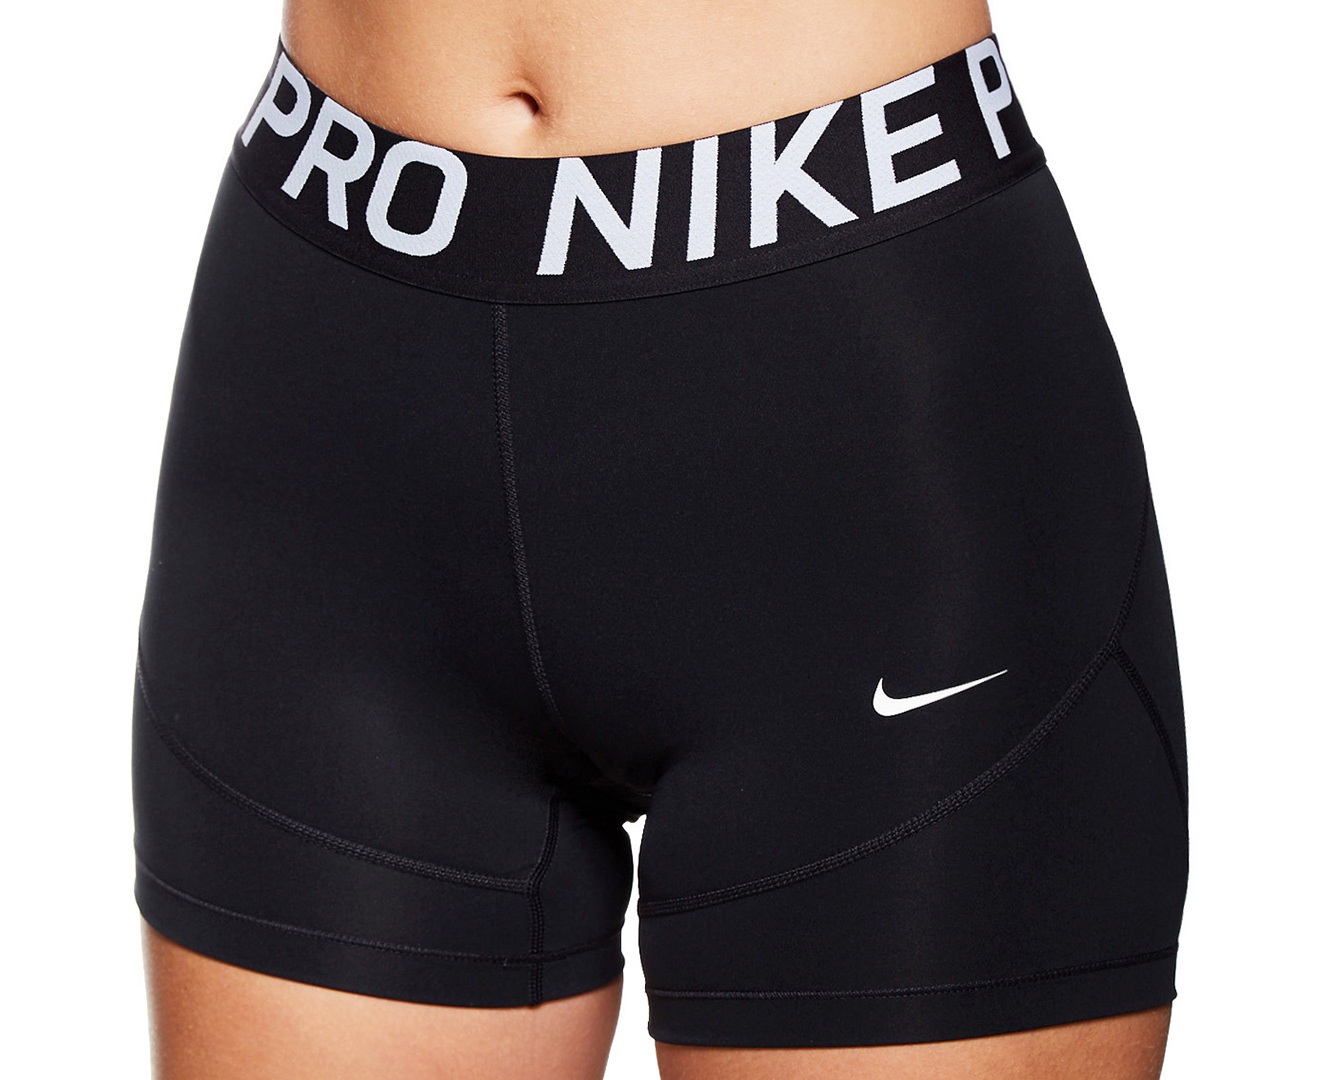 Nike Pro 3 Shorts Black/(White) Stylerunner, 52% OFF